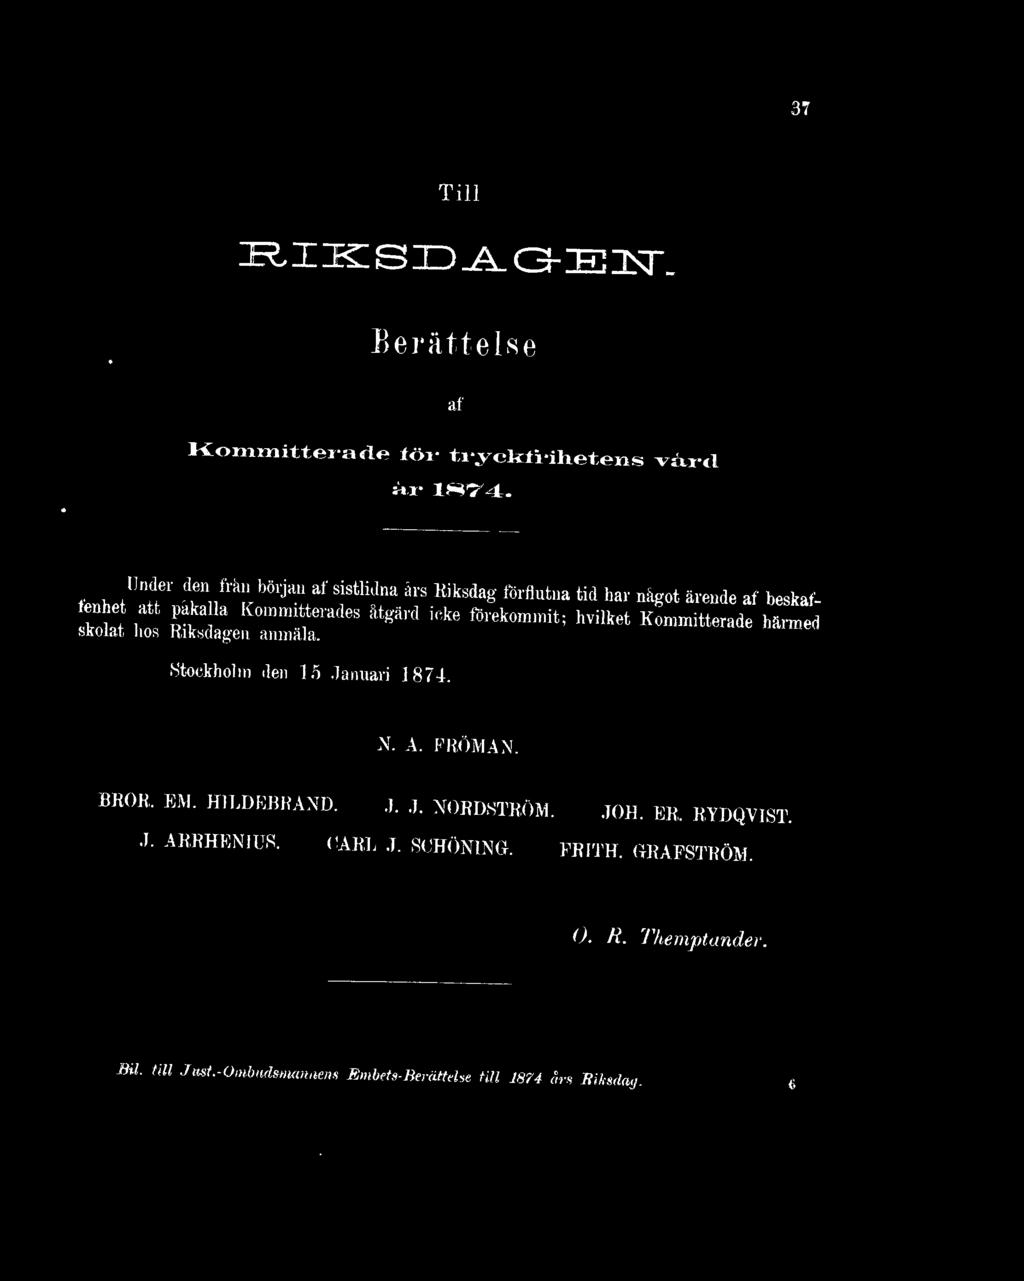 , "r'j<les %äni **anumnåt! hvi, * «Stockholm den 15 Januari 1874. N. A. FRÖMAN. BROR. EM. H1LDEBRAND. J. J. NORDSTRÖM.